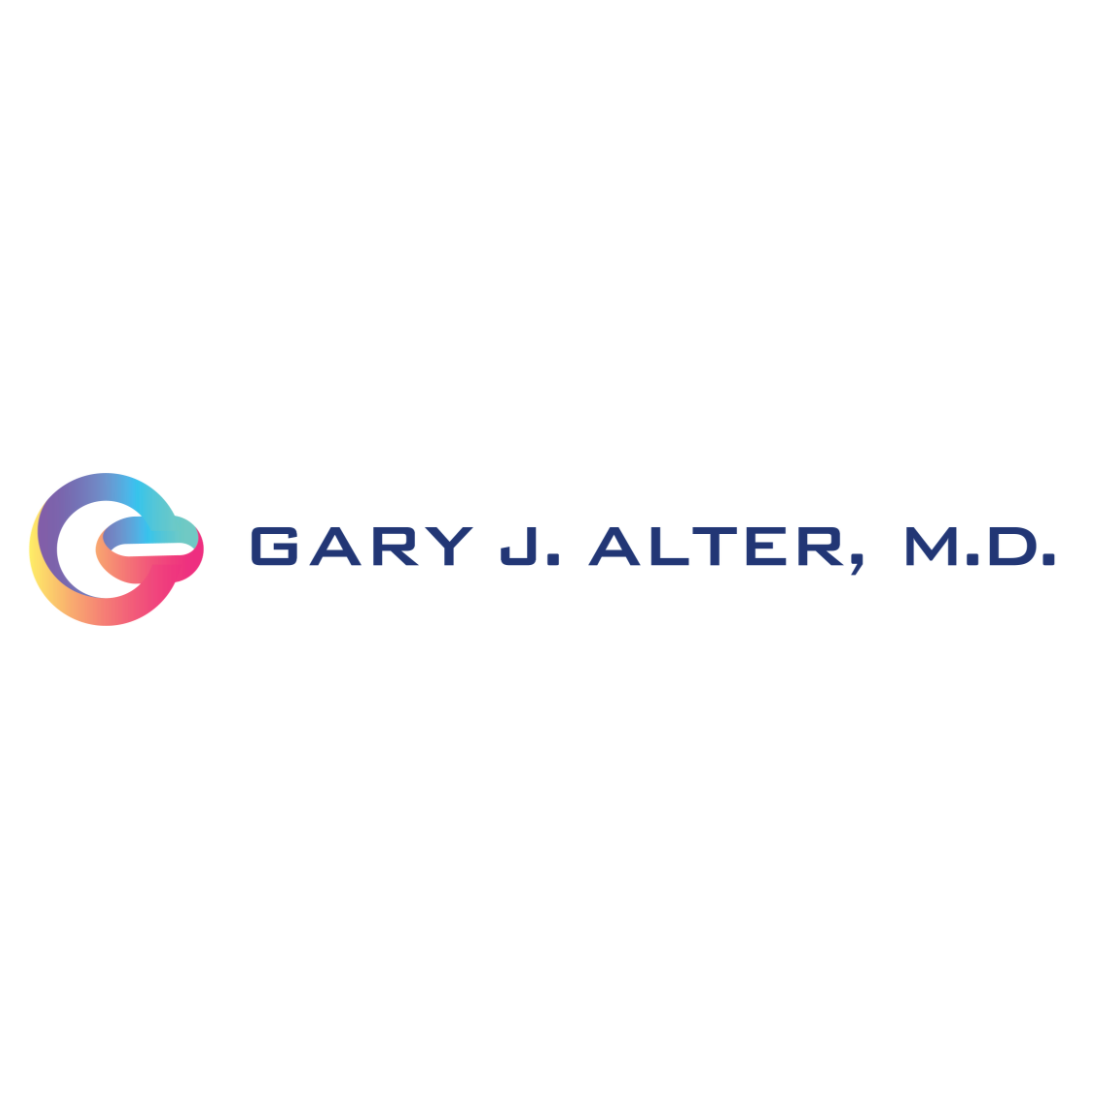 Gary J Alter Md Logo